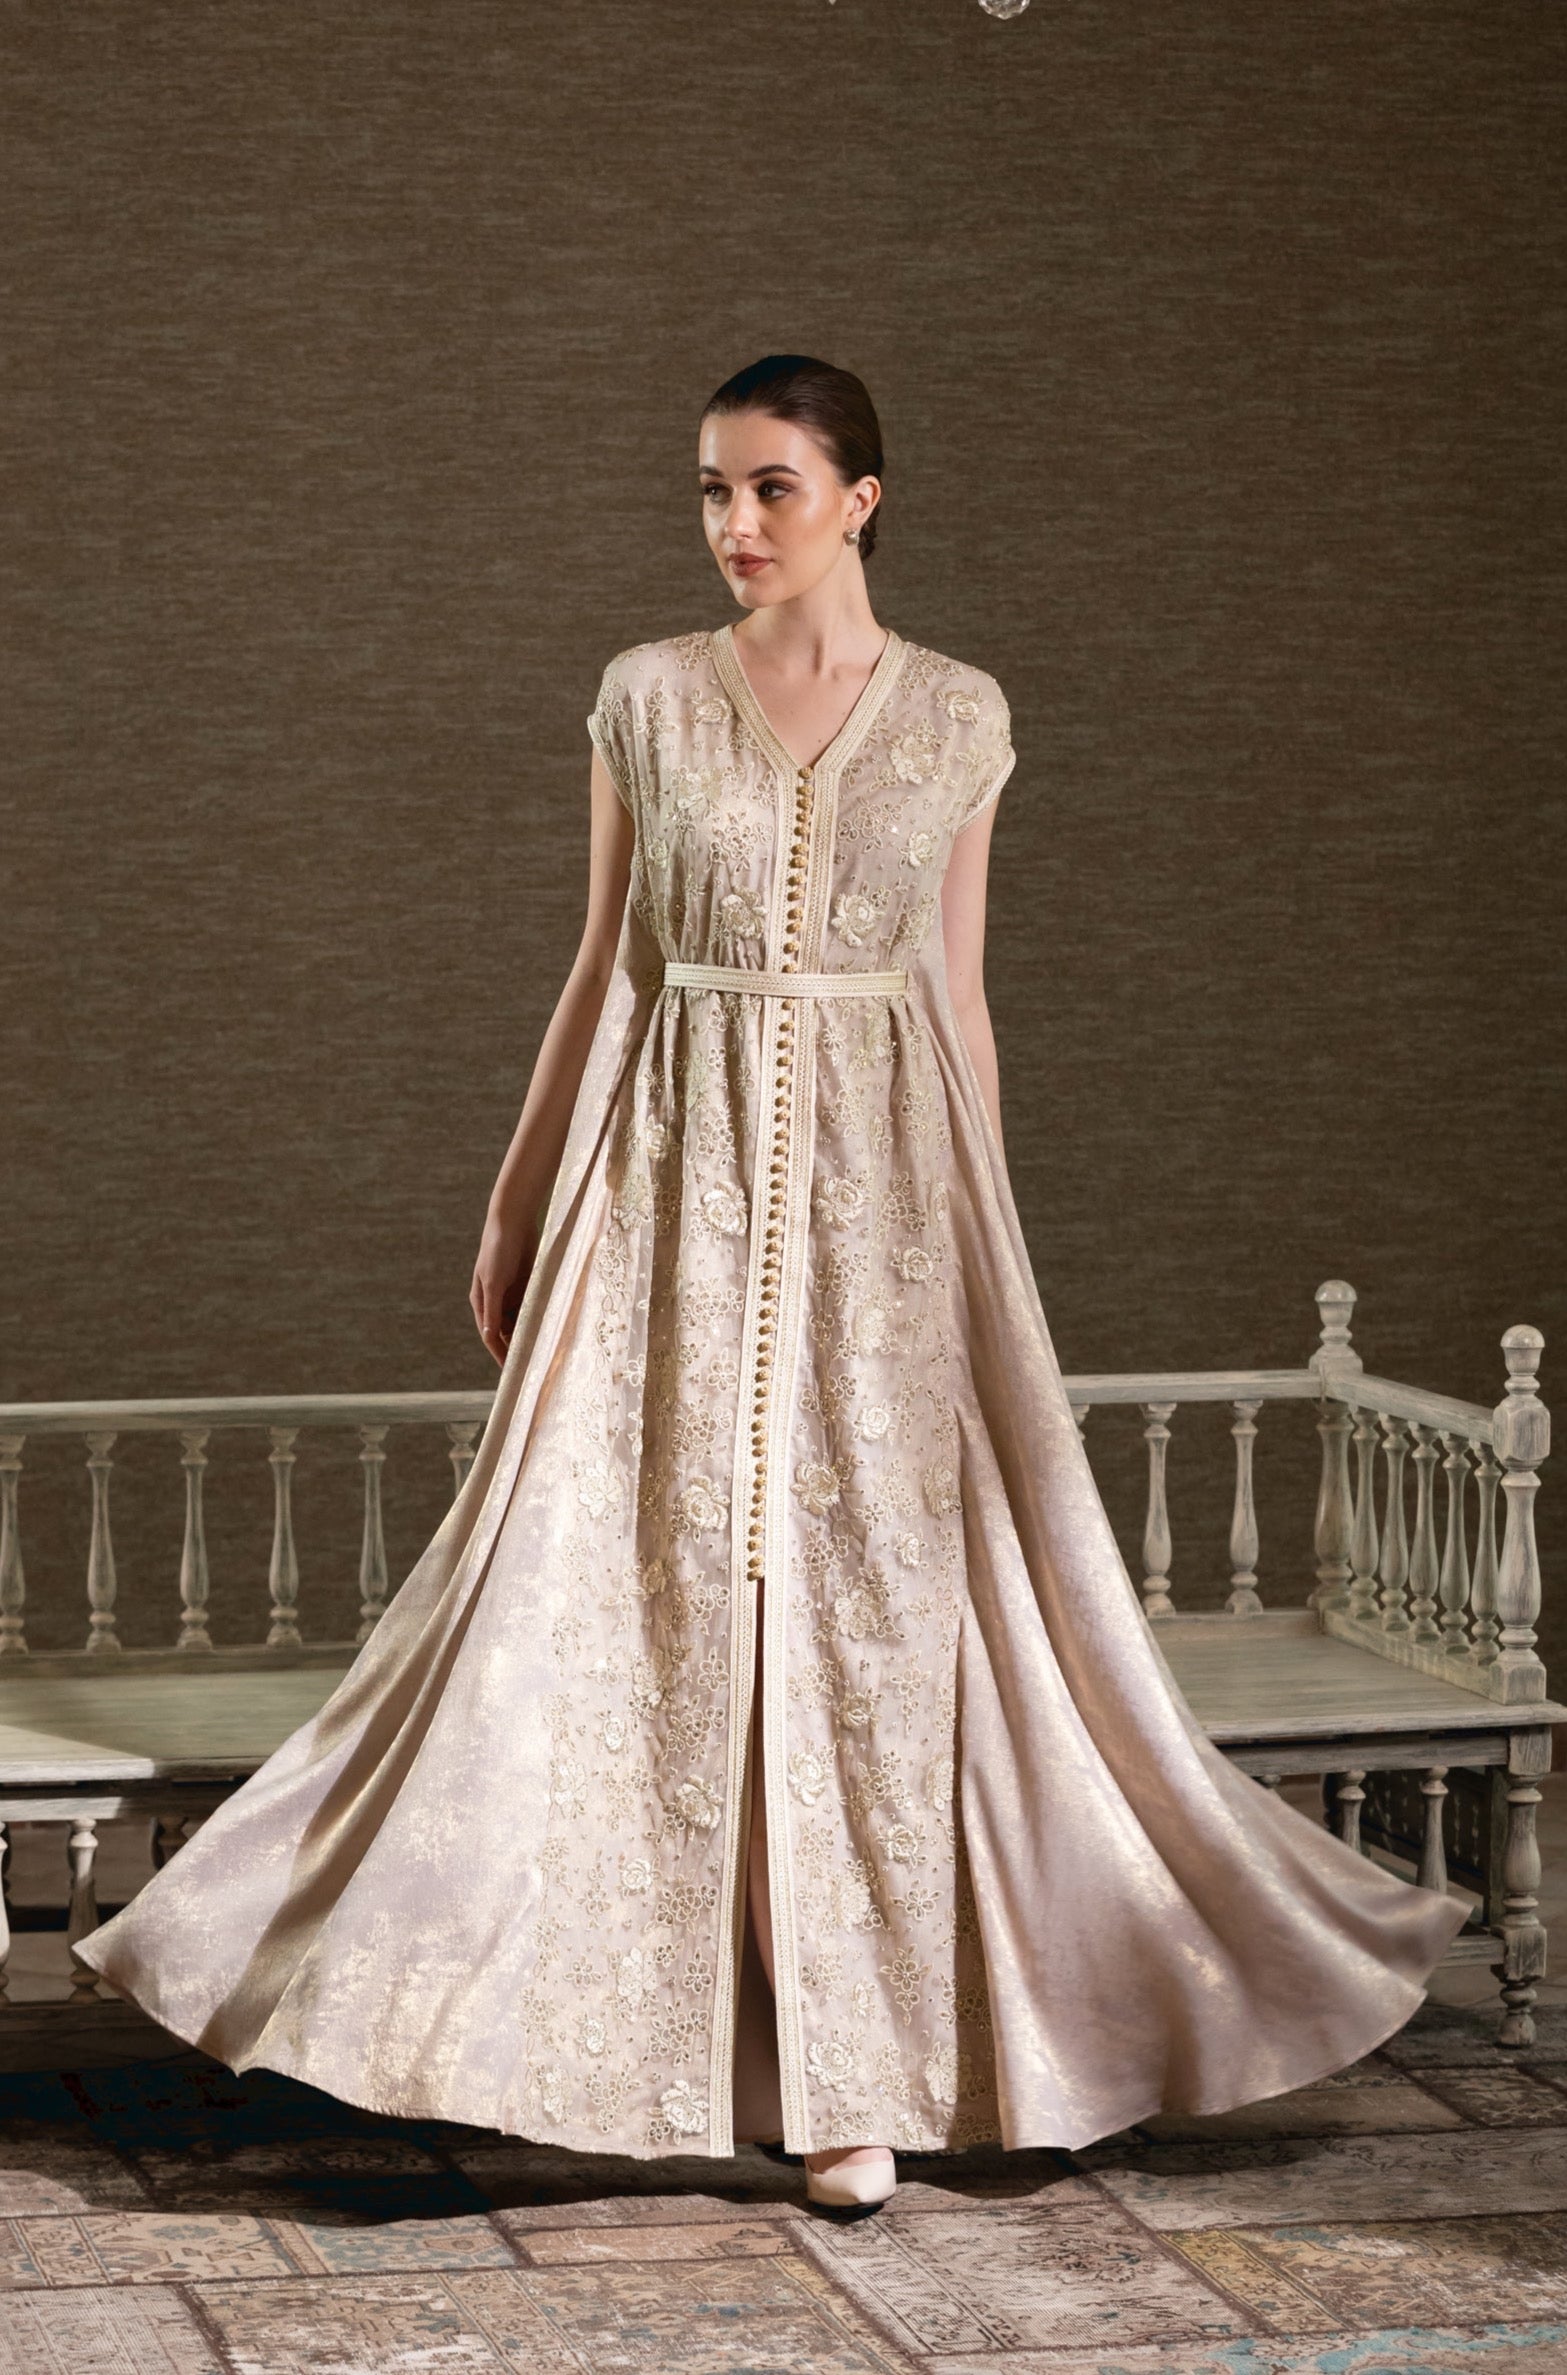 Bridal Caftan. Modest evening gown. White kaftan | eBay